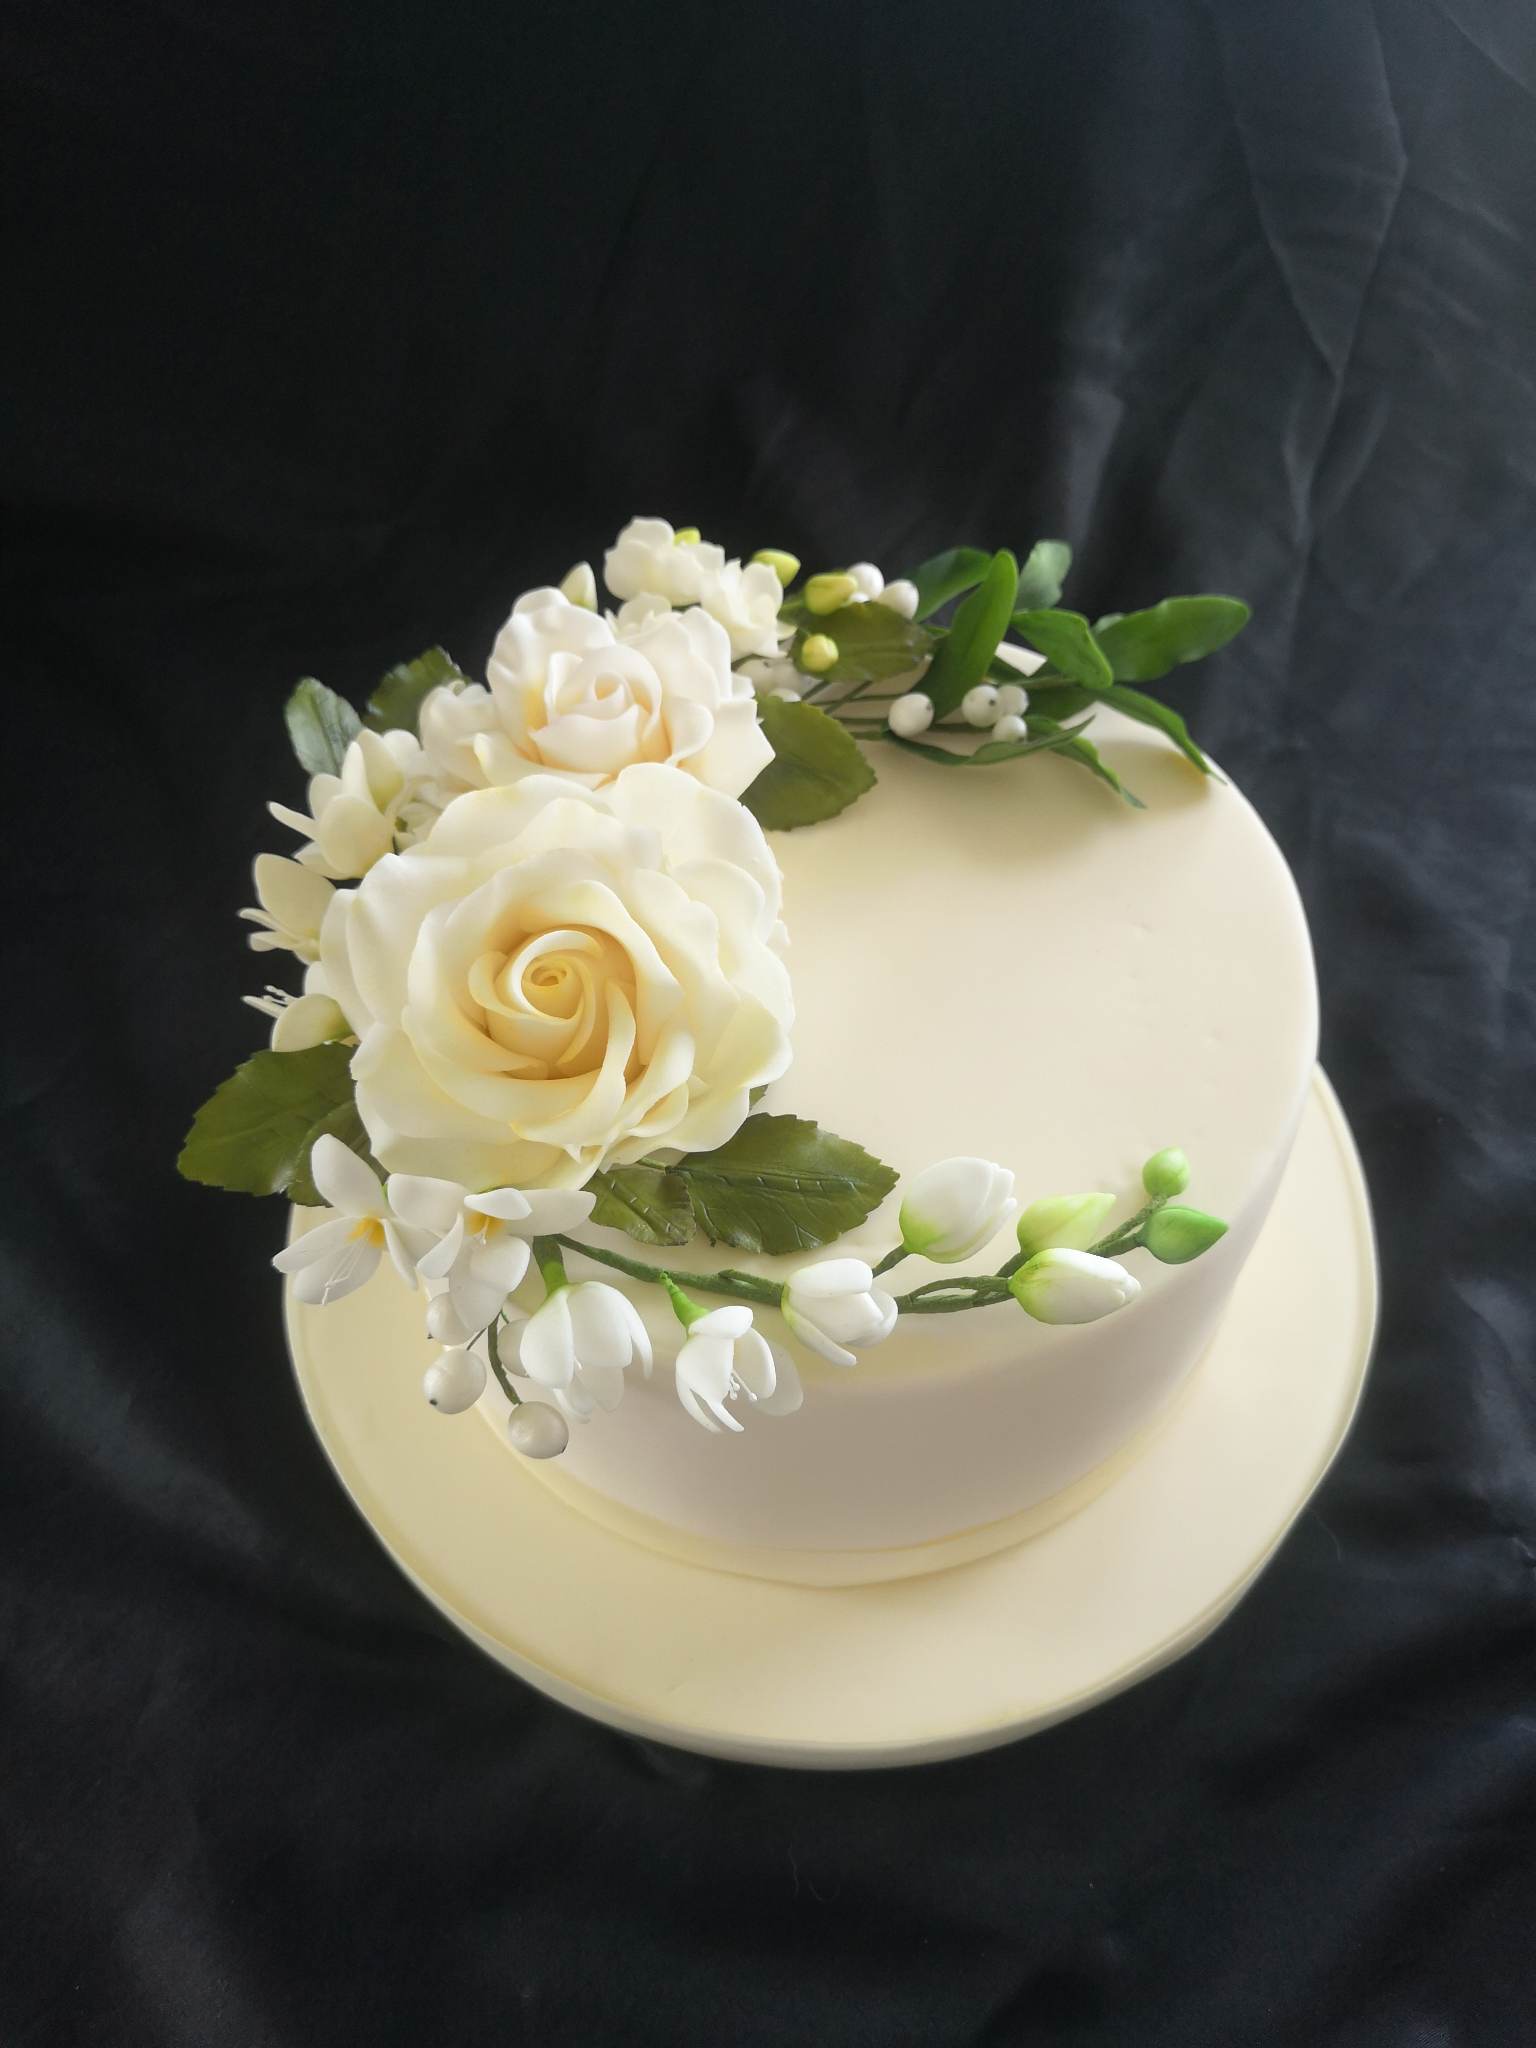 Stunning white fondant cake with hand made sugar flowers